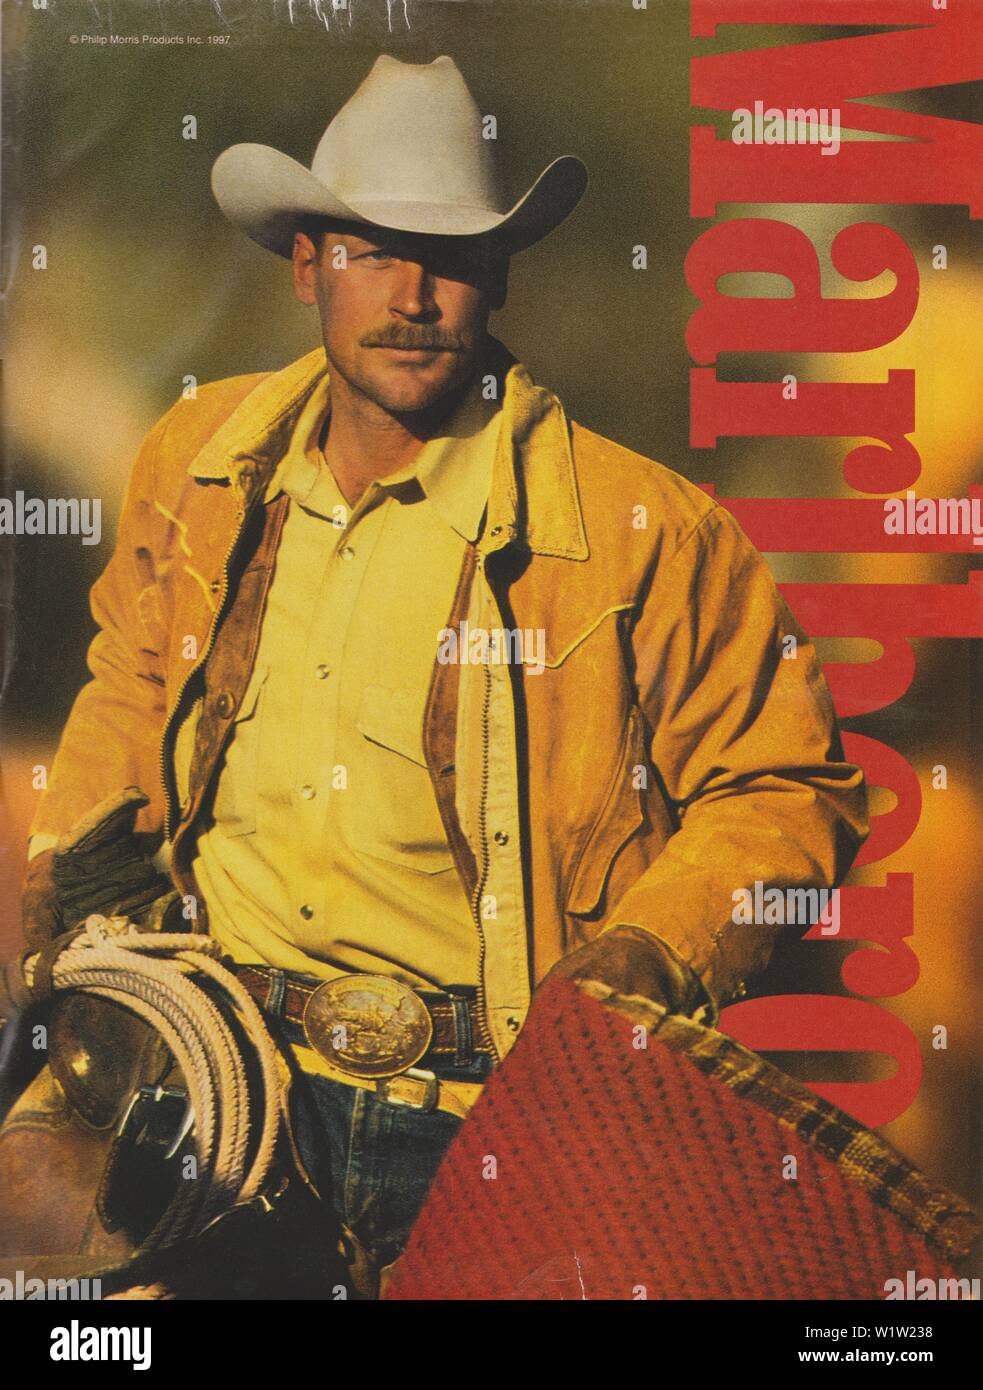 poster advertising Marlboro cigarettes, magazine 1997, No slogan, creative advertisement Marlboro by Philip Morris from 1990s Stock Photo